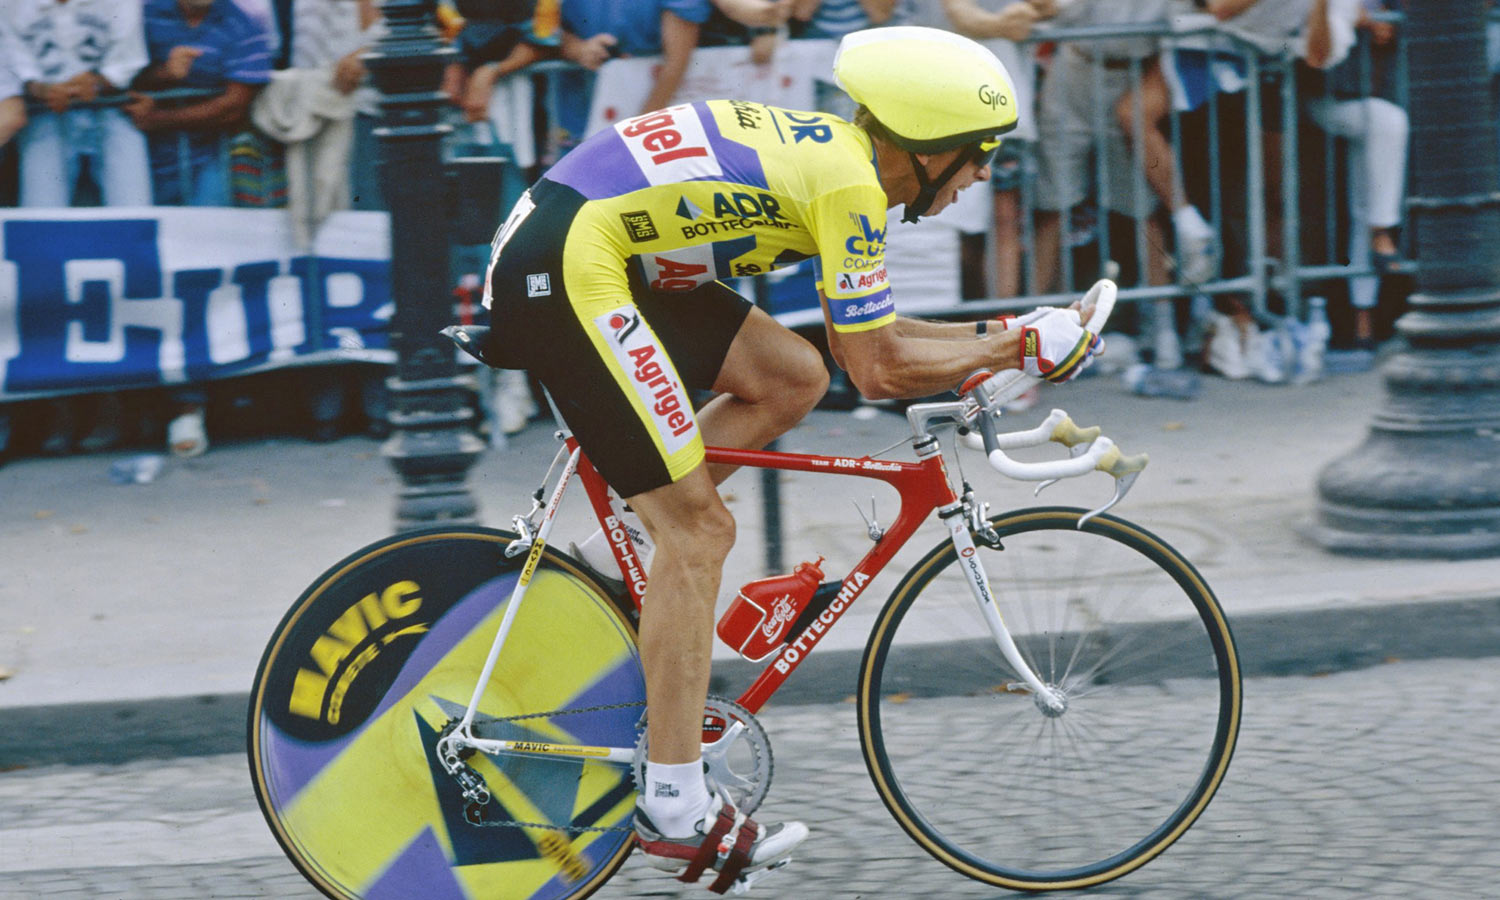 LeMond-8-Team-LeMond-road-bike-cycling-club_Greg-LeMond-Boutroux-France.jpg